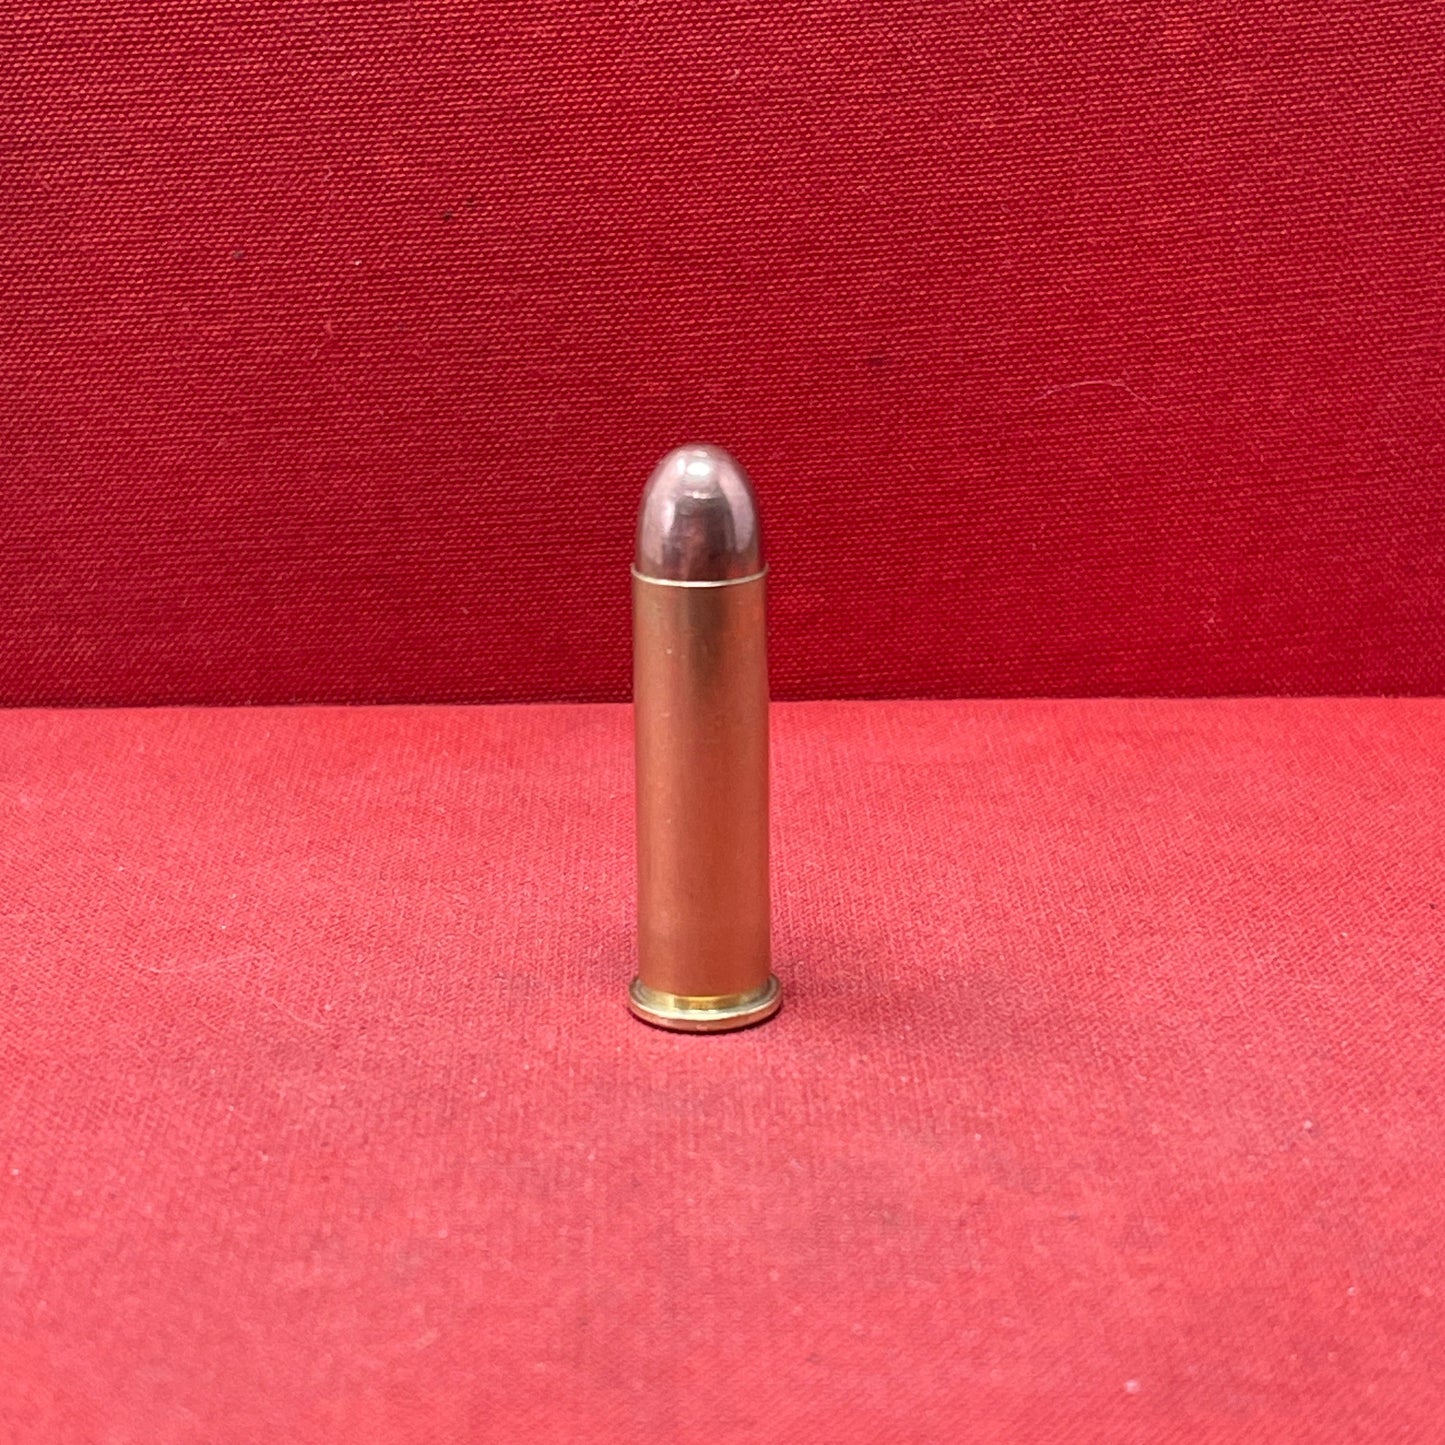 INERT 357 Magnum RN FMJ Cartridge